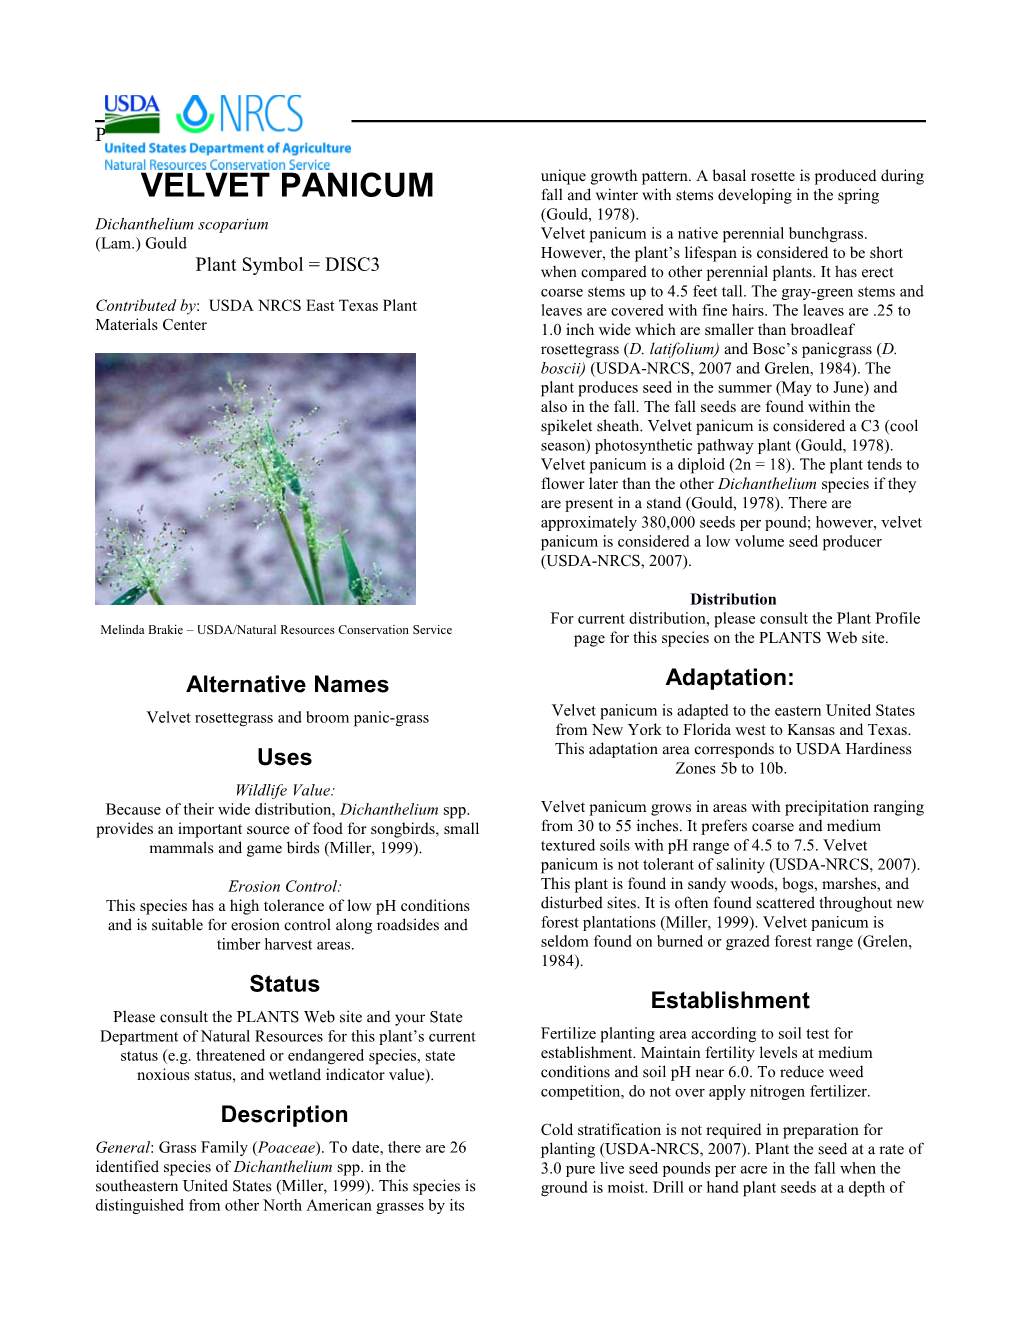 Velvet Panicum Plant Guide